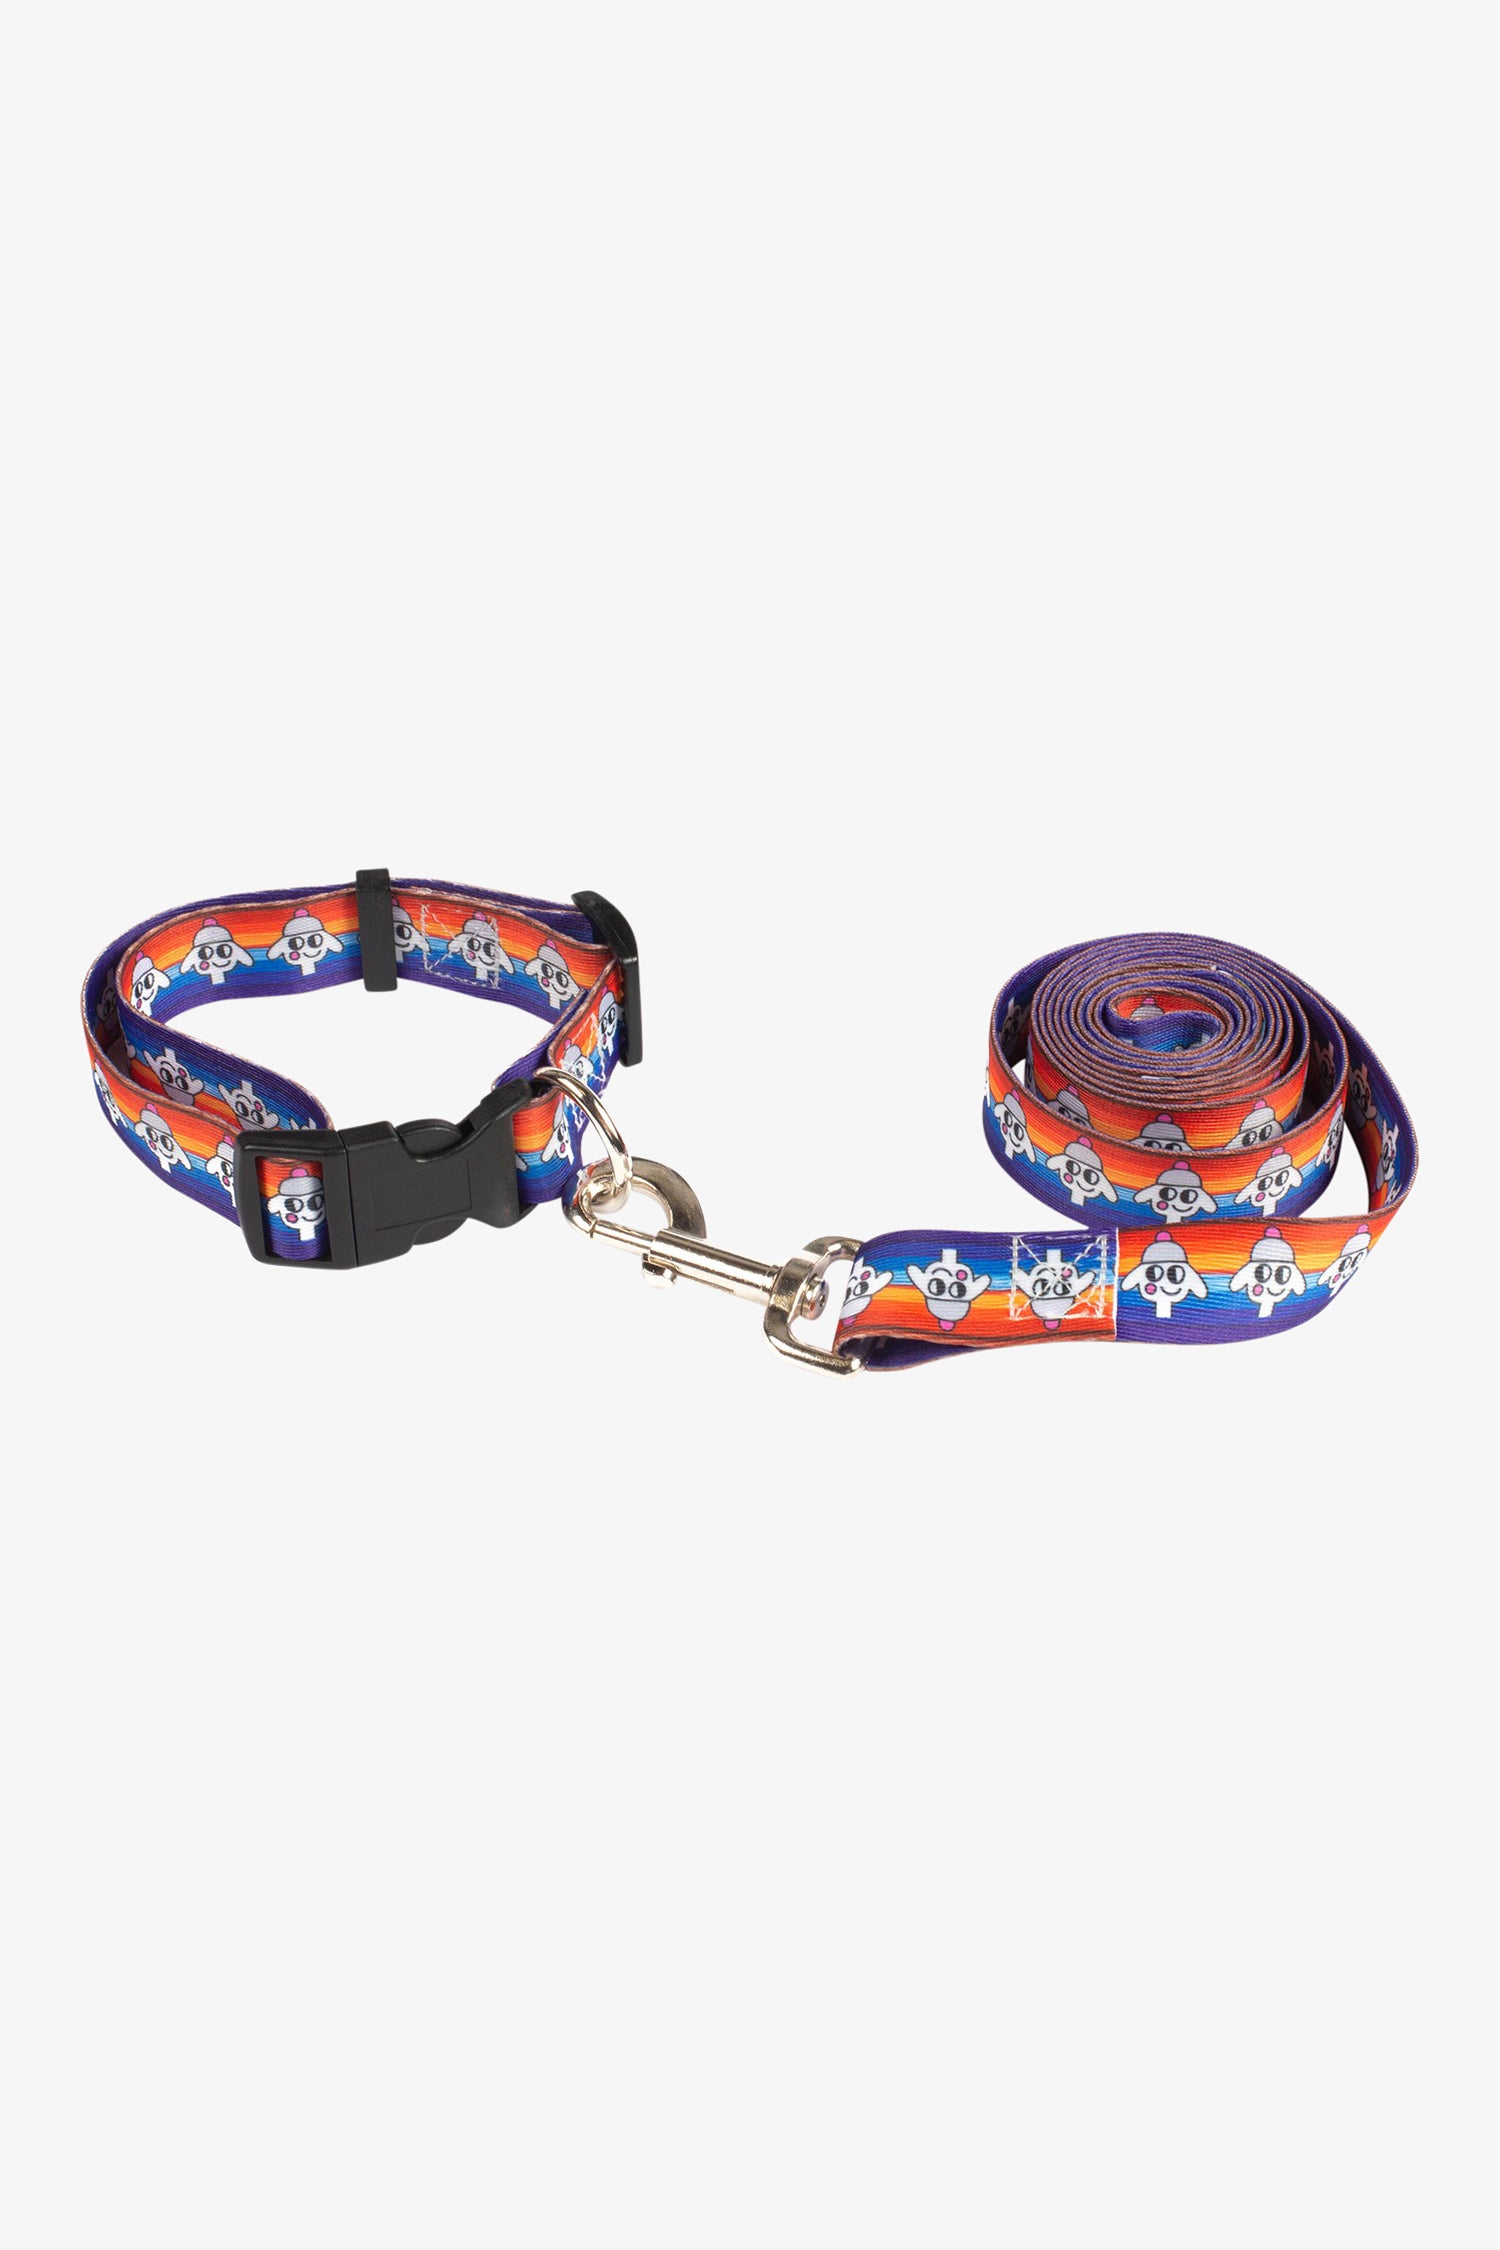 Selectshop FRAME - BETTER Tim Comix 'Dadito' Dog Leash All-Accessories Dubai